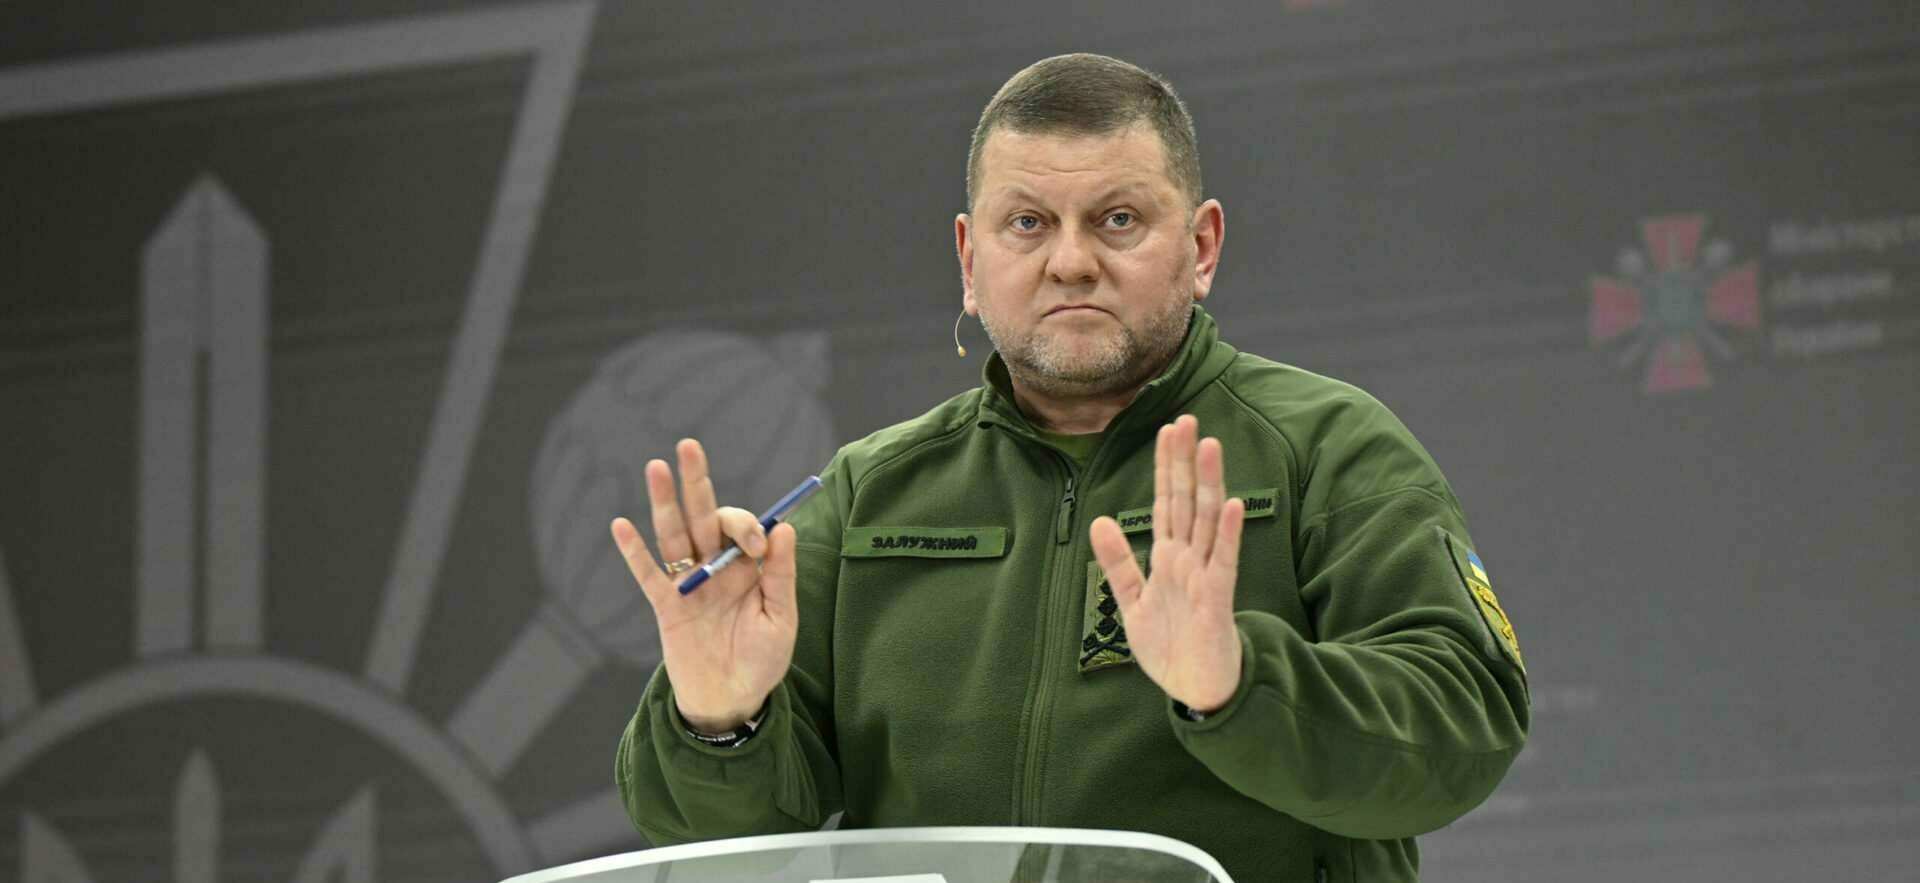 Zaluzhnyi leaves as Ukraine’s army chief amid deepening rift